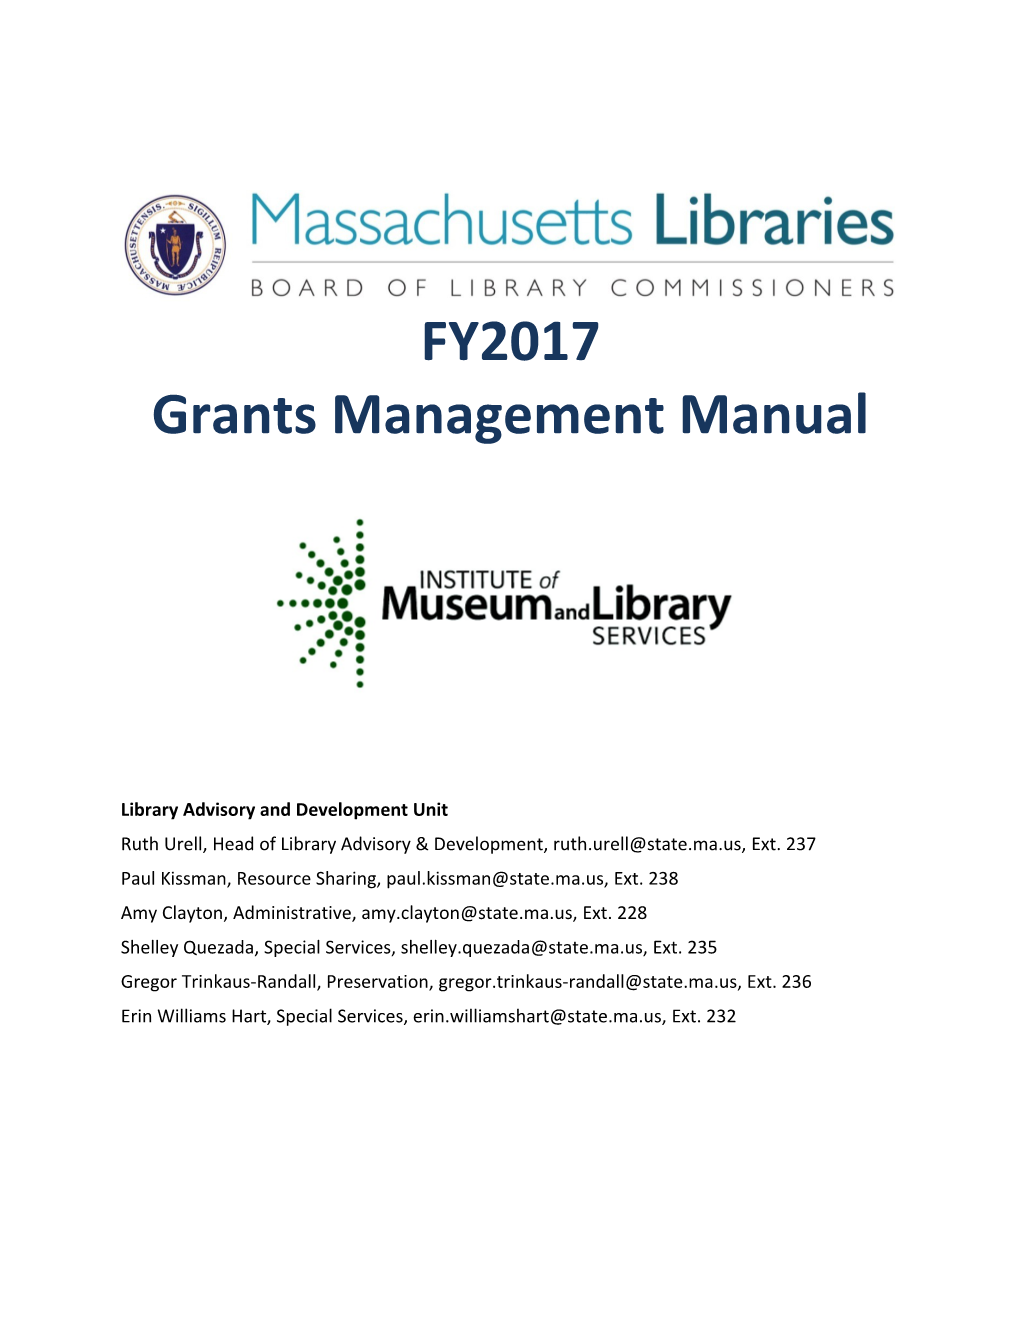 FY17 Grants Management Manual